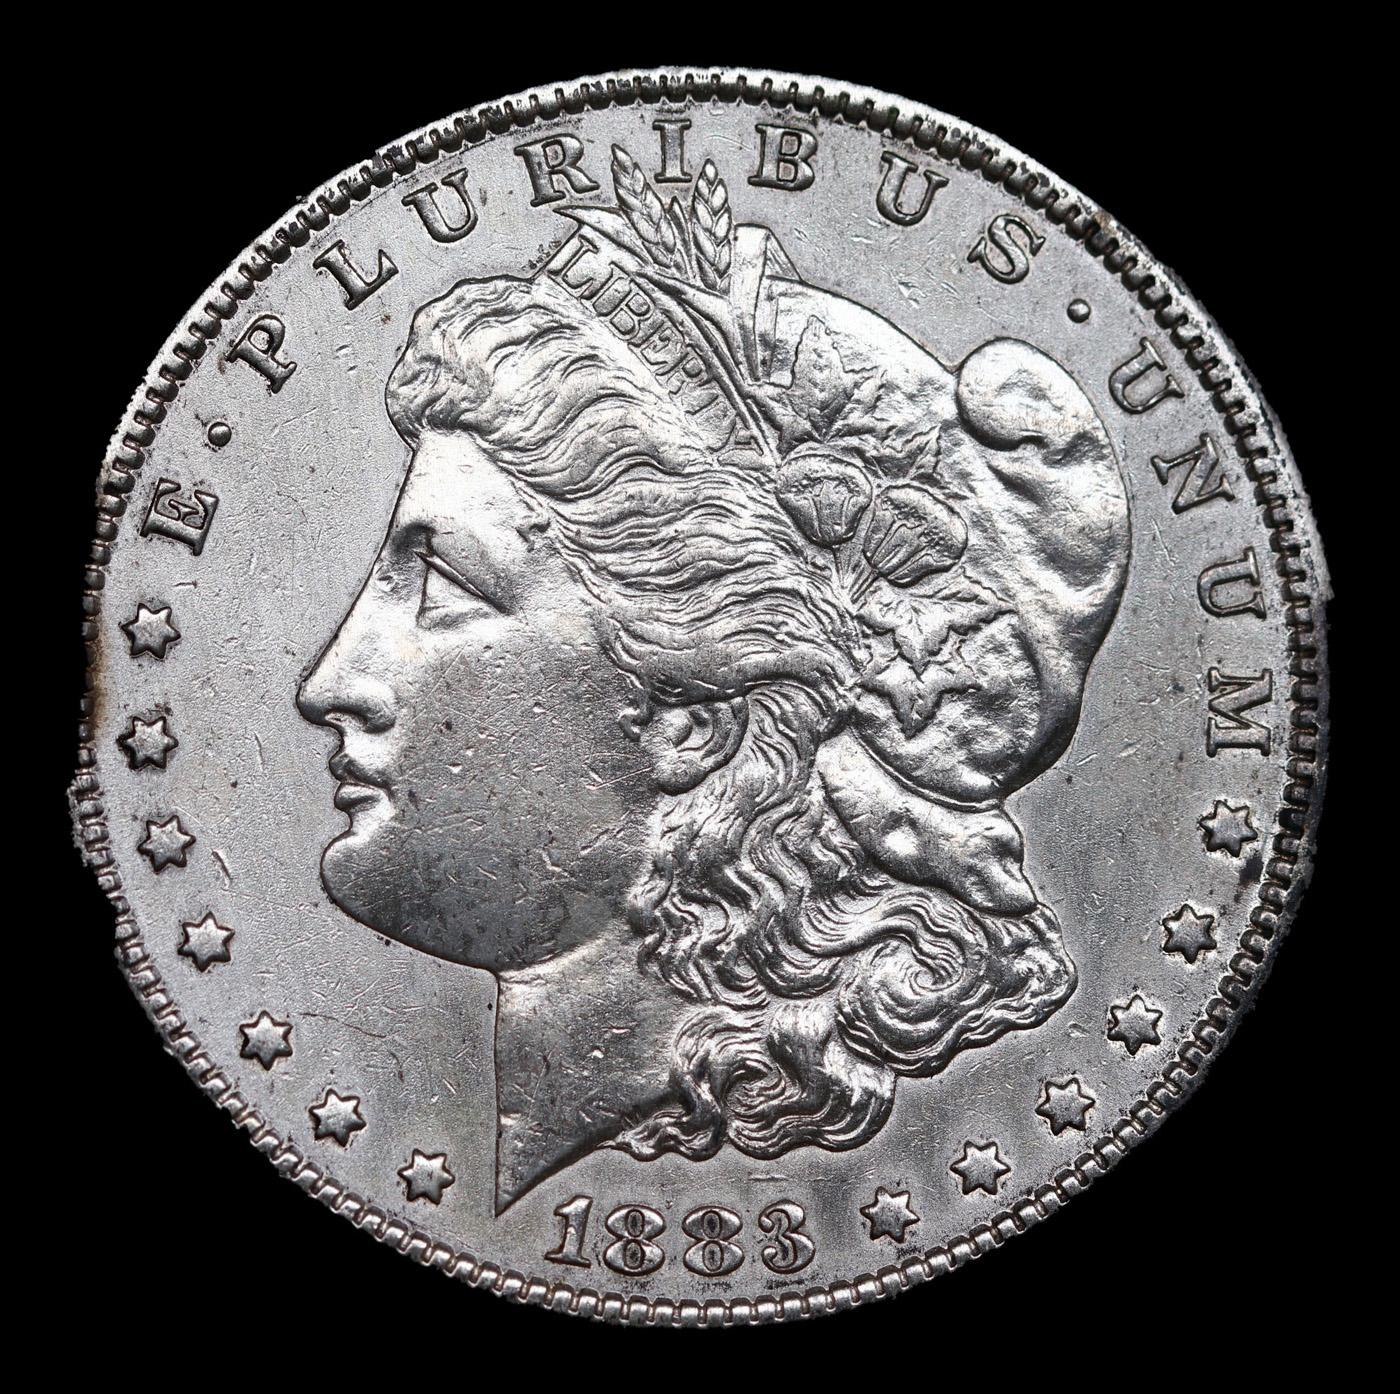 ***Auction Highlight*** 1883-s Morgan Dollar 1 Graded ms62 details By SEGS (fc)